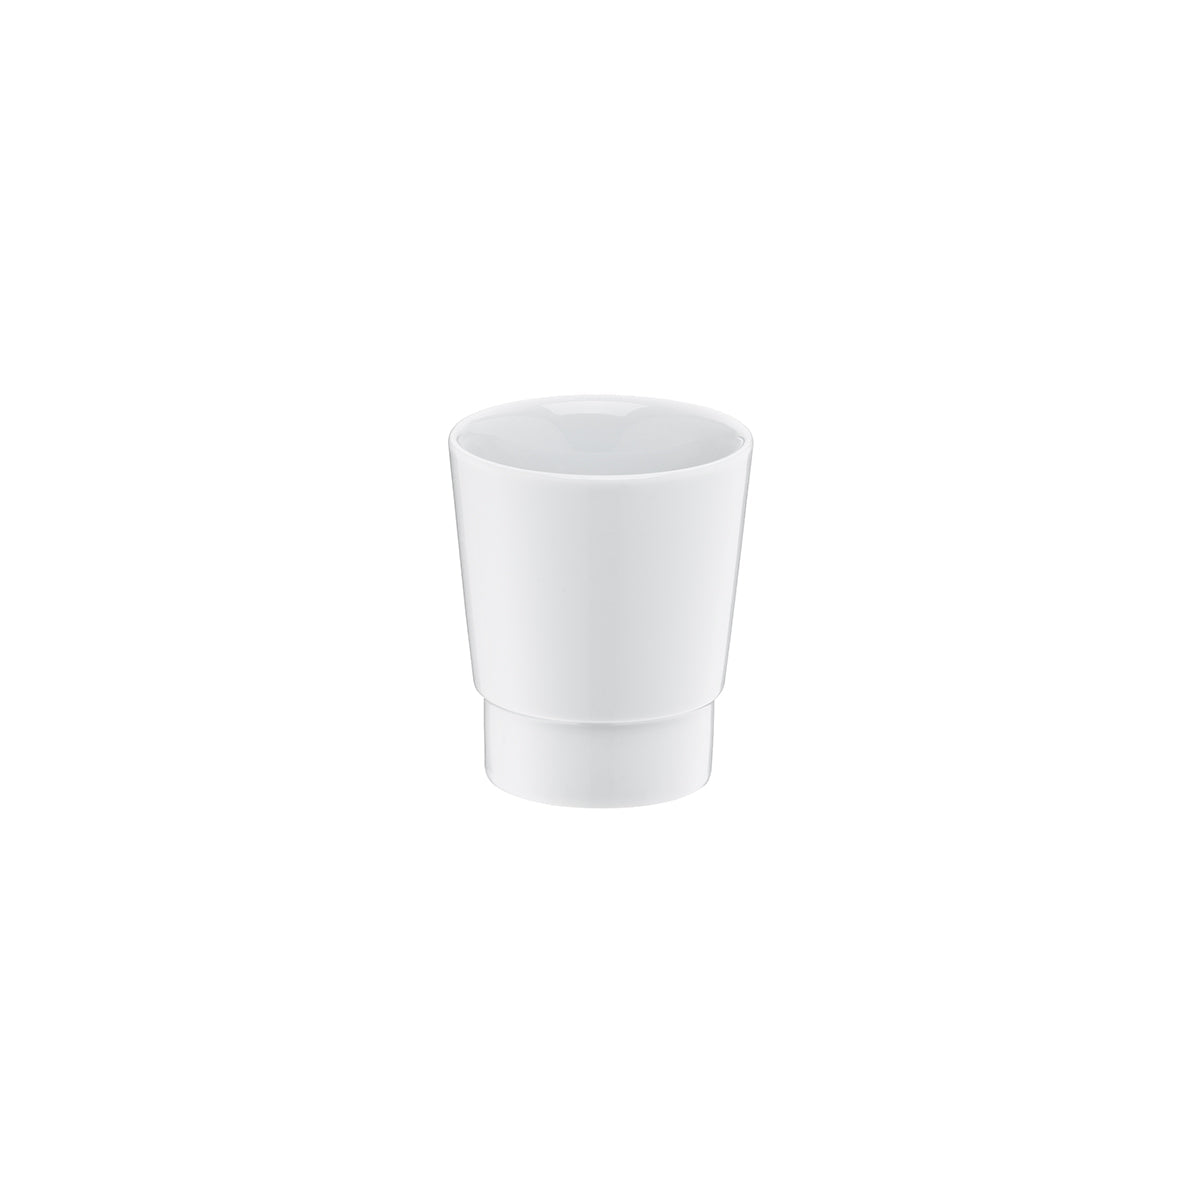 55.0113.9805 WMF CultureCup Porcelain Cup Small 80ml Tomkin Australia Hospitality Supplies